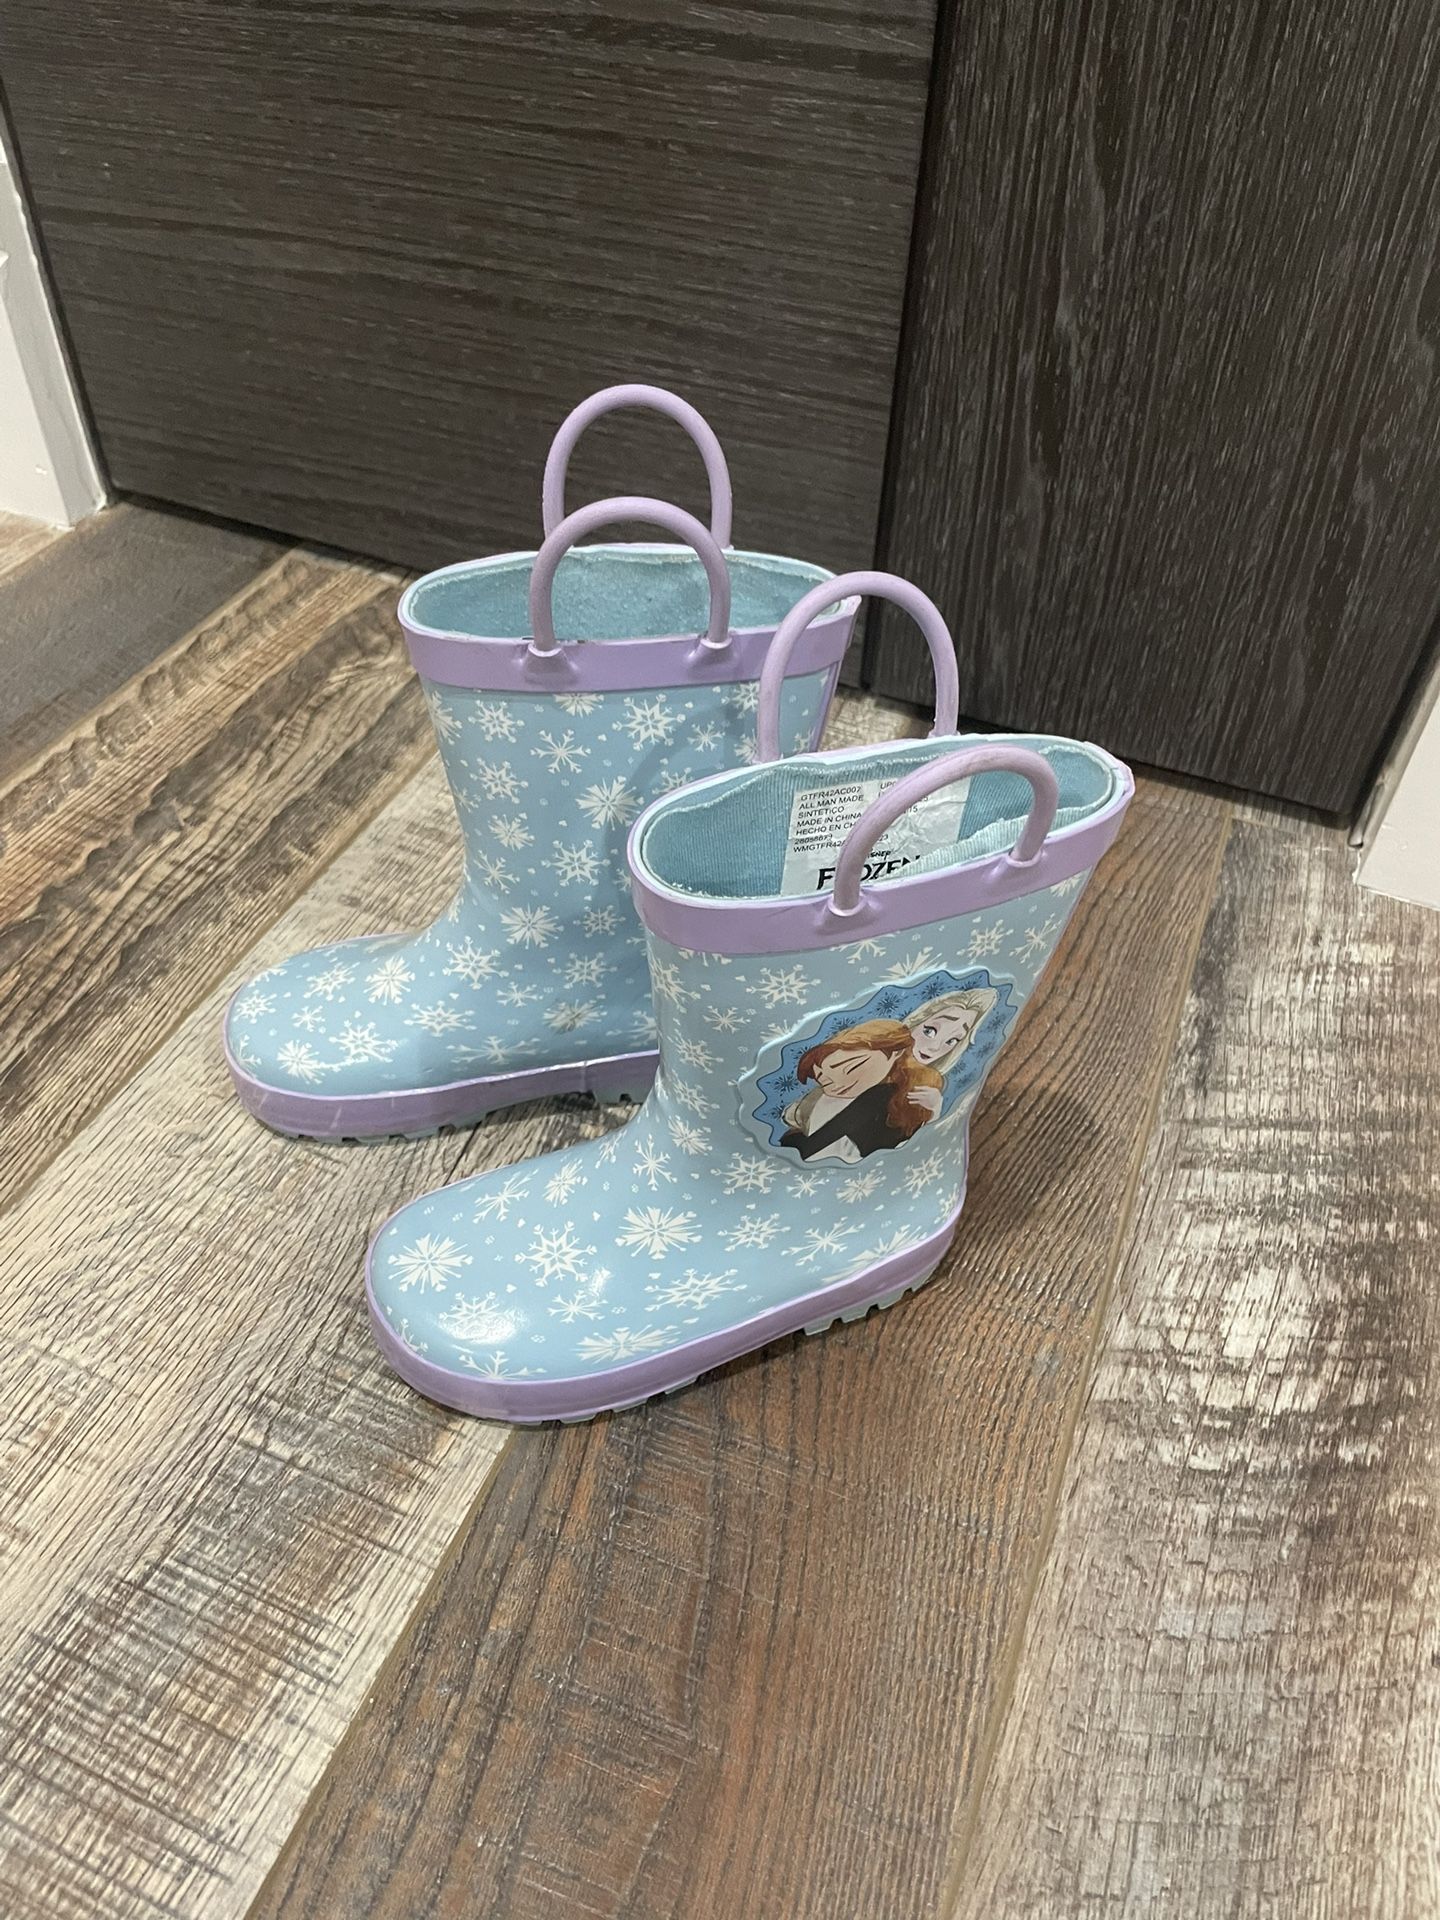 Kids Rain Boots (Size 7/8)